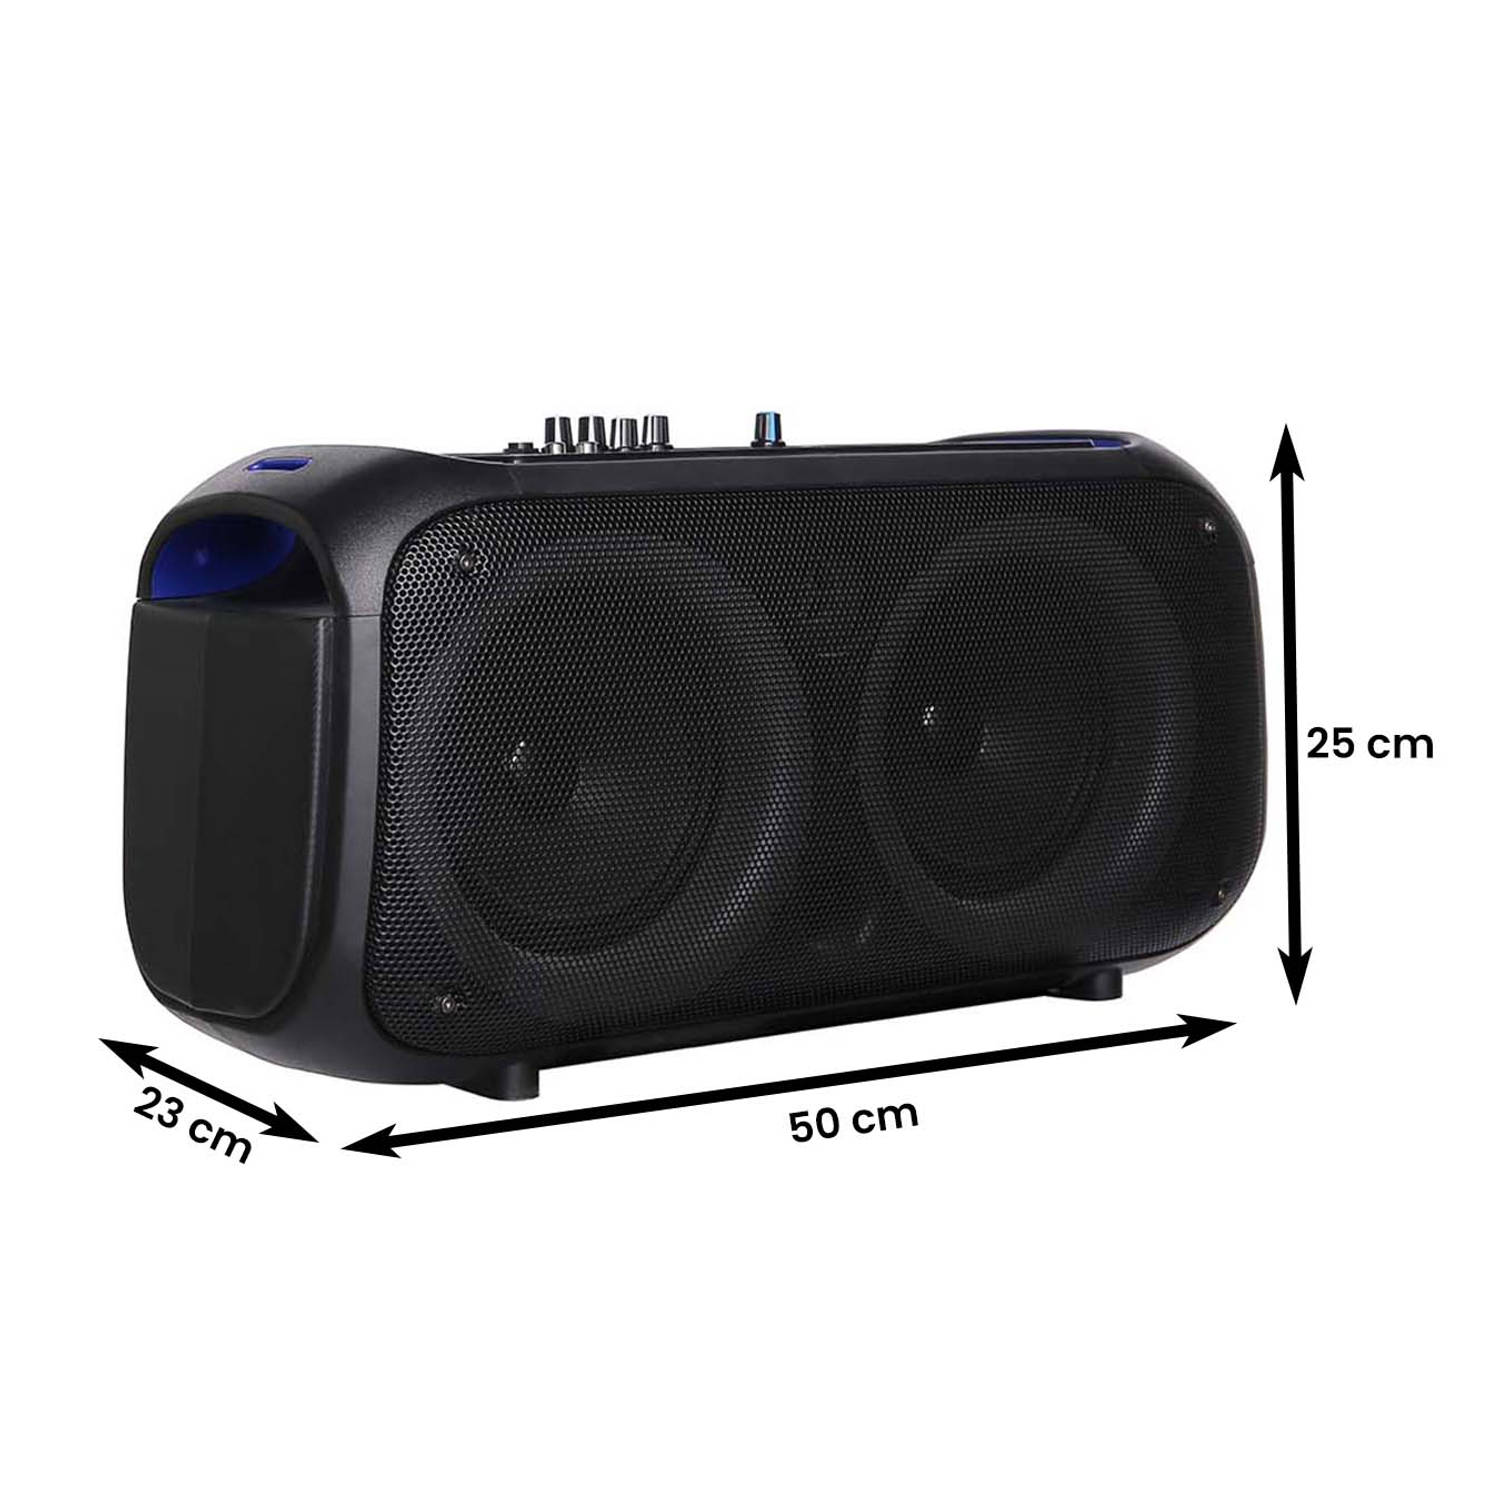 Hyundai Electronics - Party Brick Xl - Bluetooth Speaker - 50 X 23 X 25 Cm aanbieding